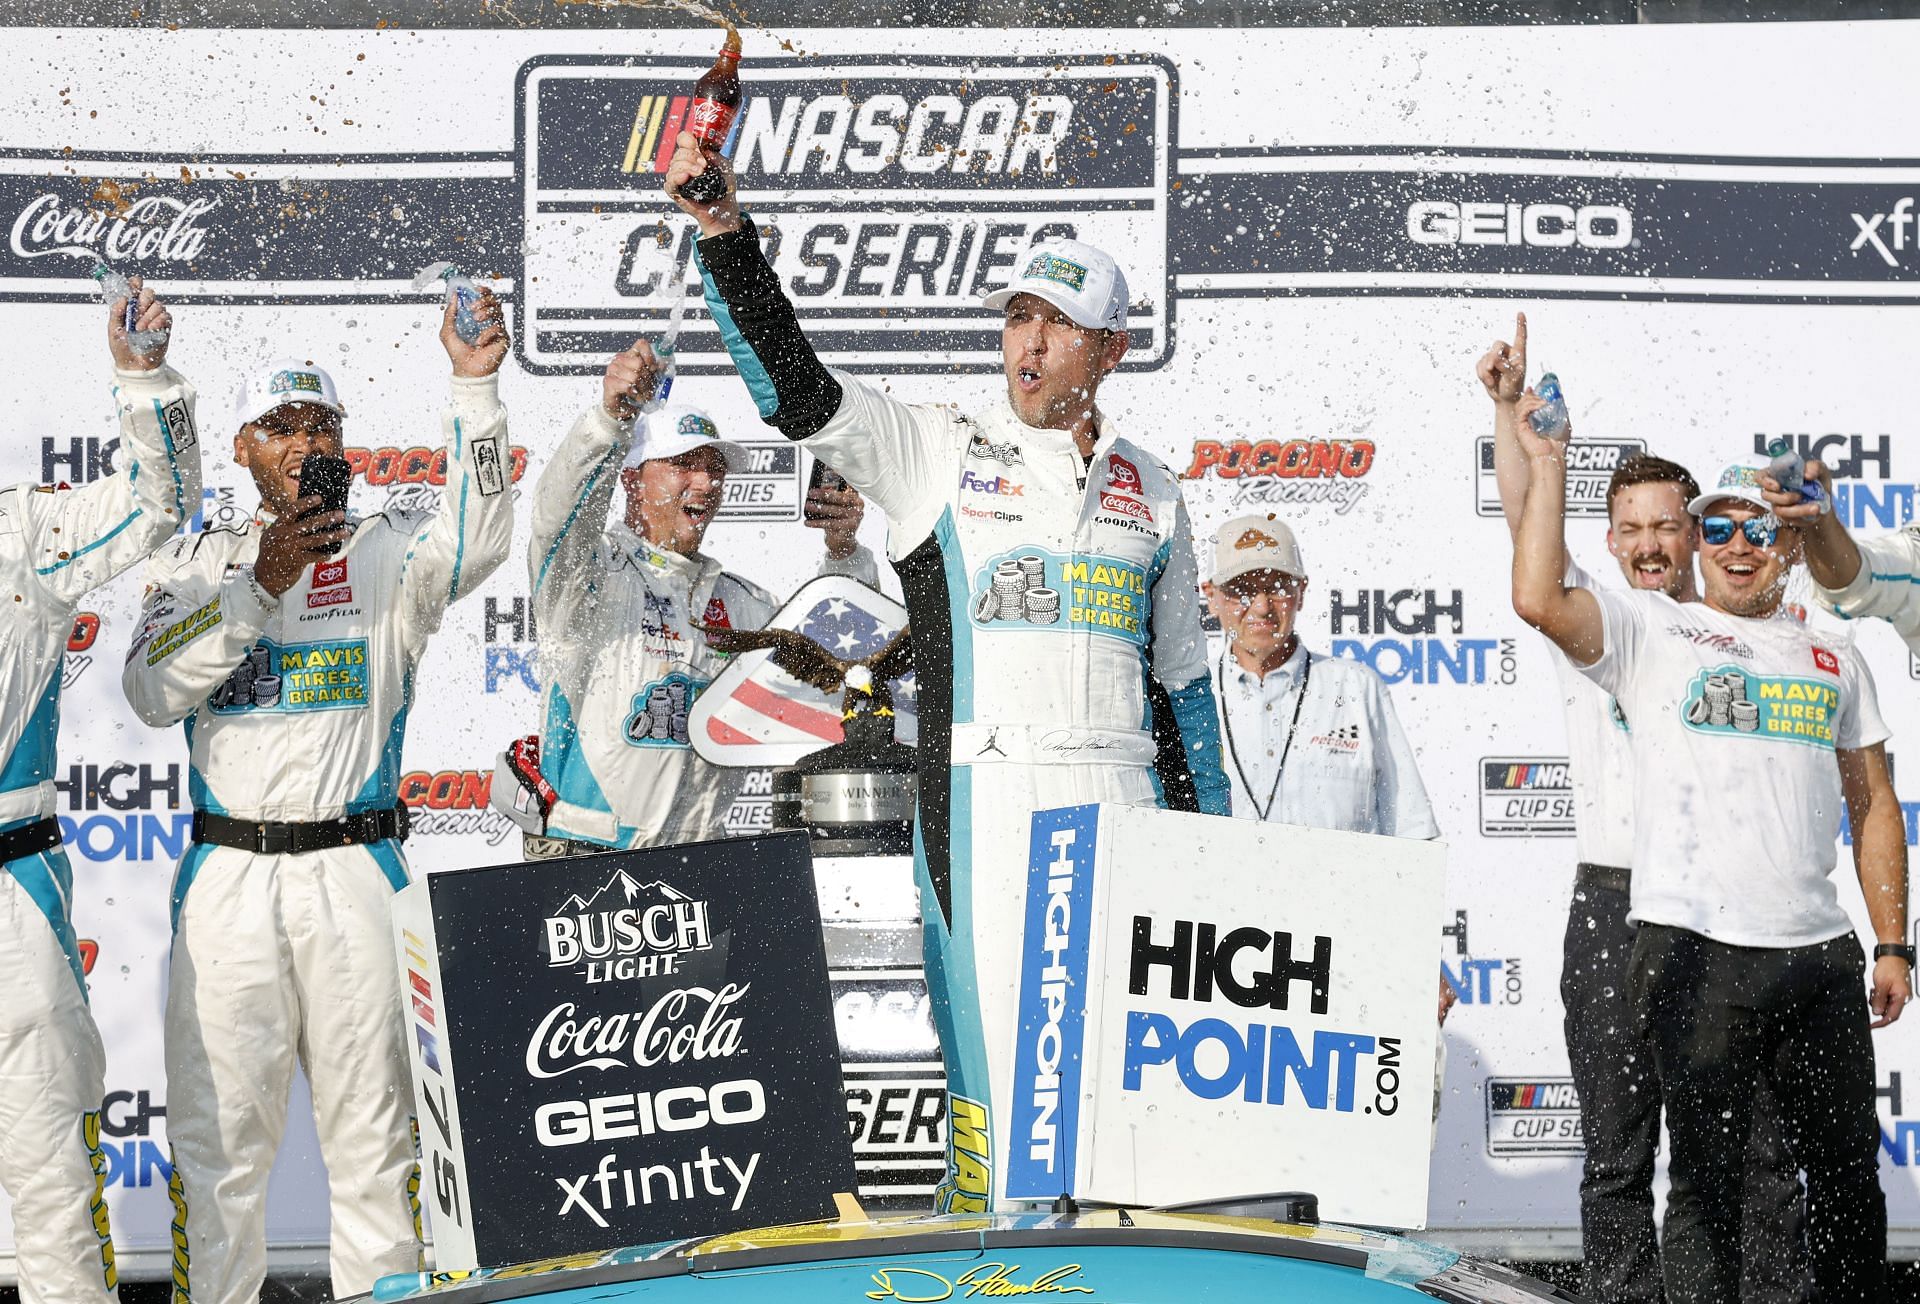 NASCAR Cup Series HighPoint.com 400